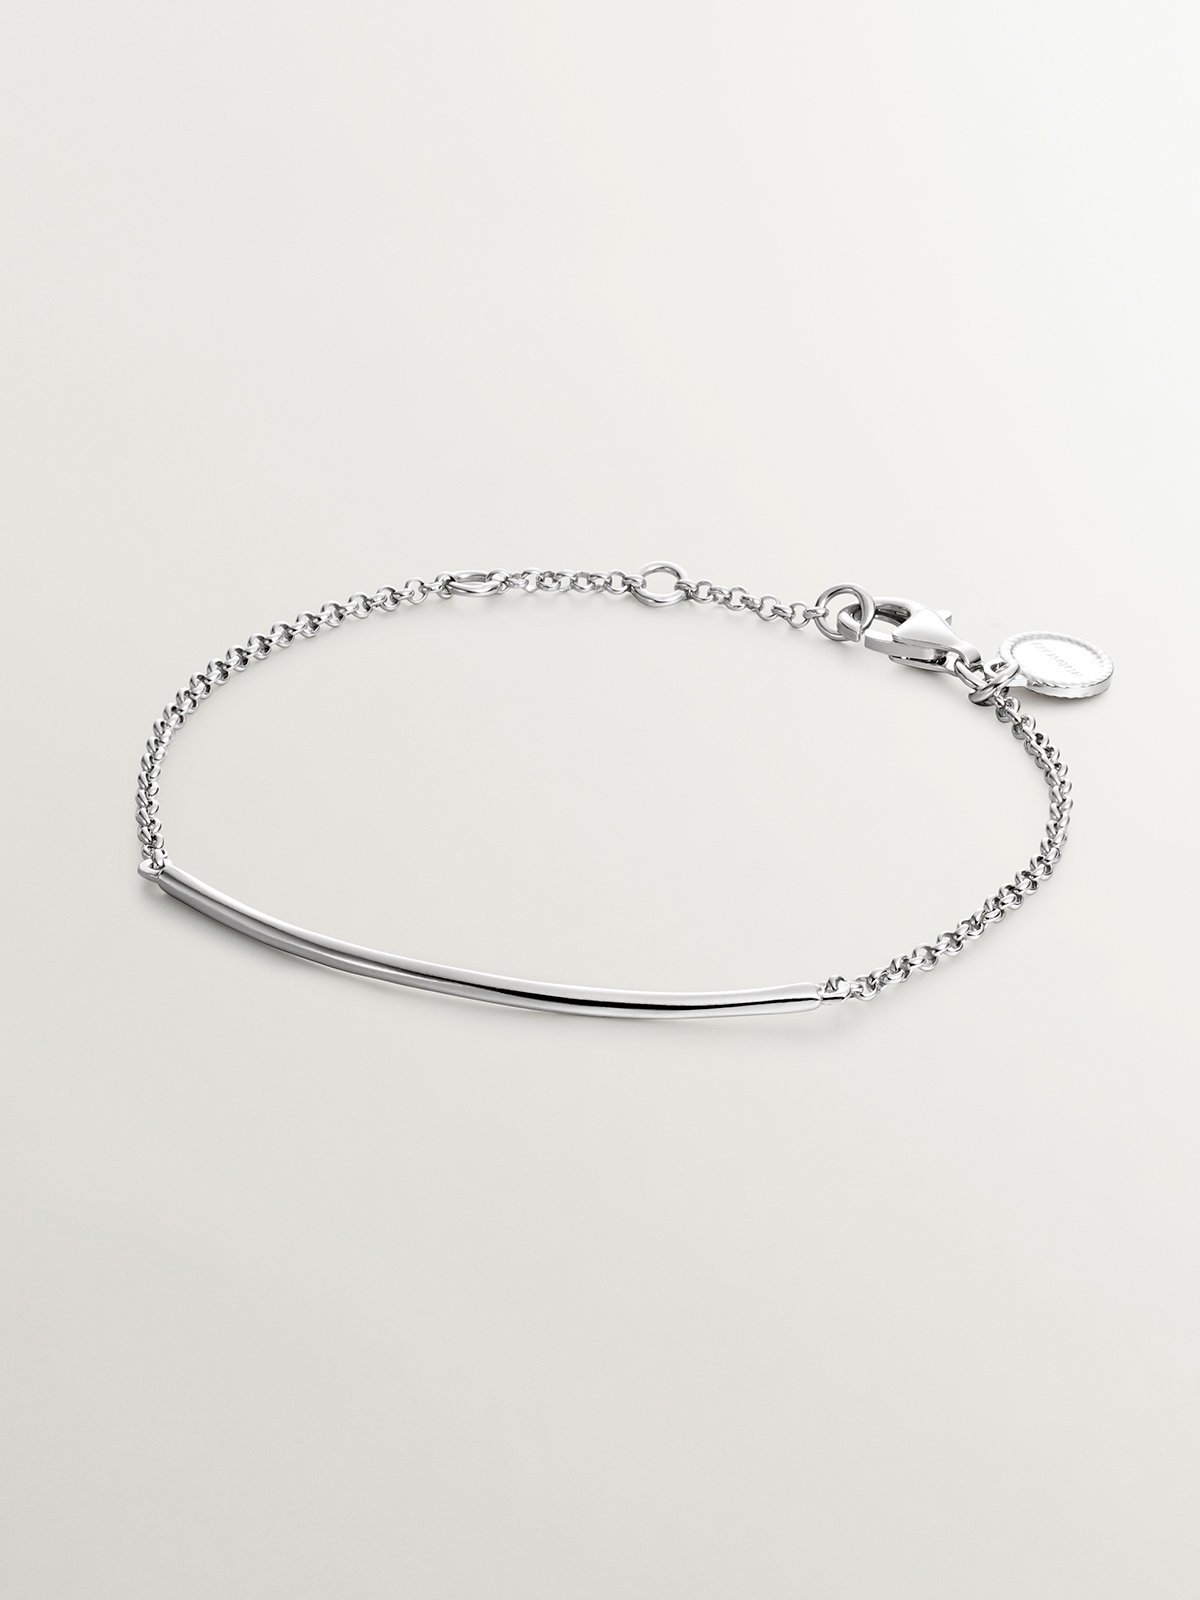 925 Silver bracelet with tube shape